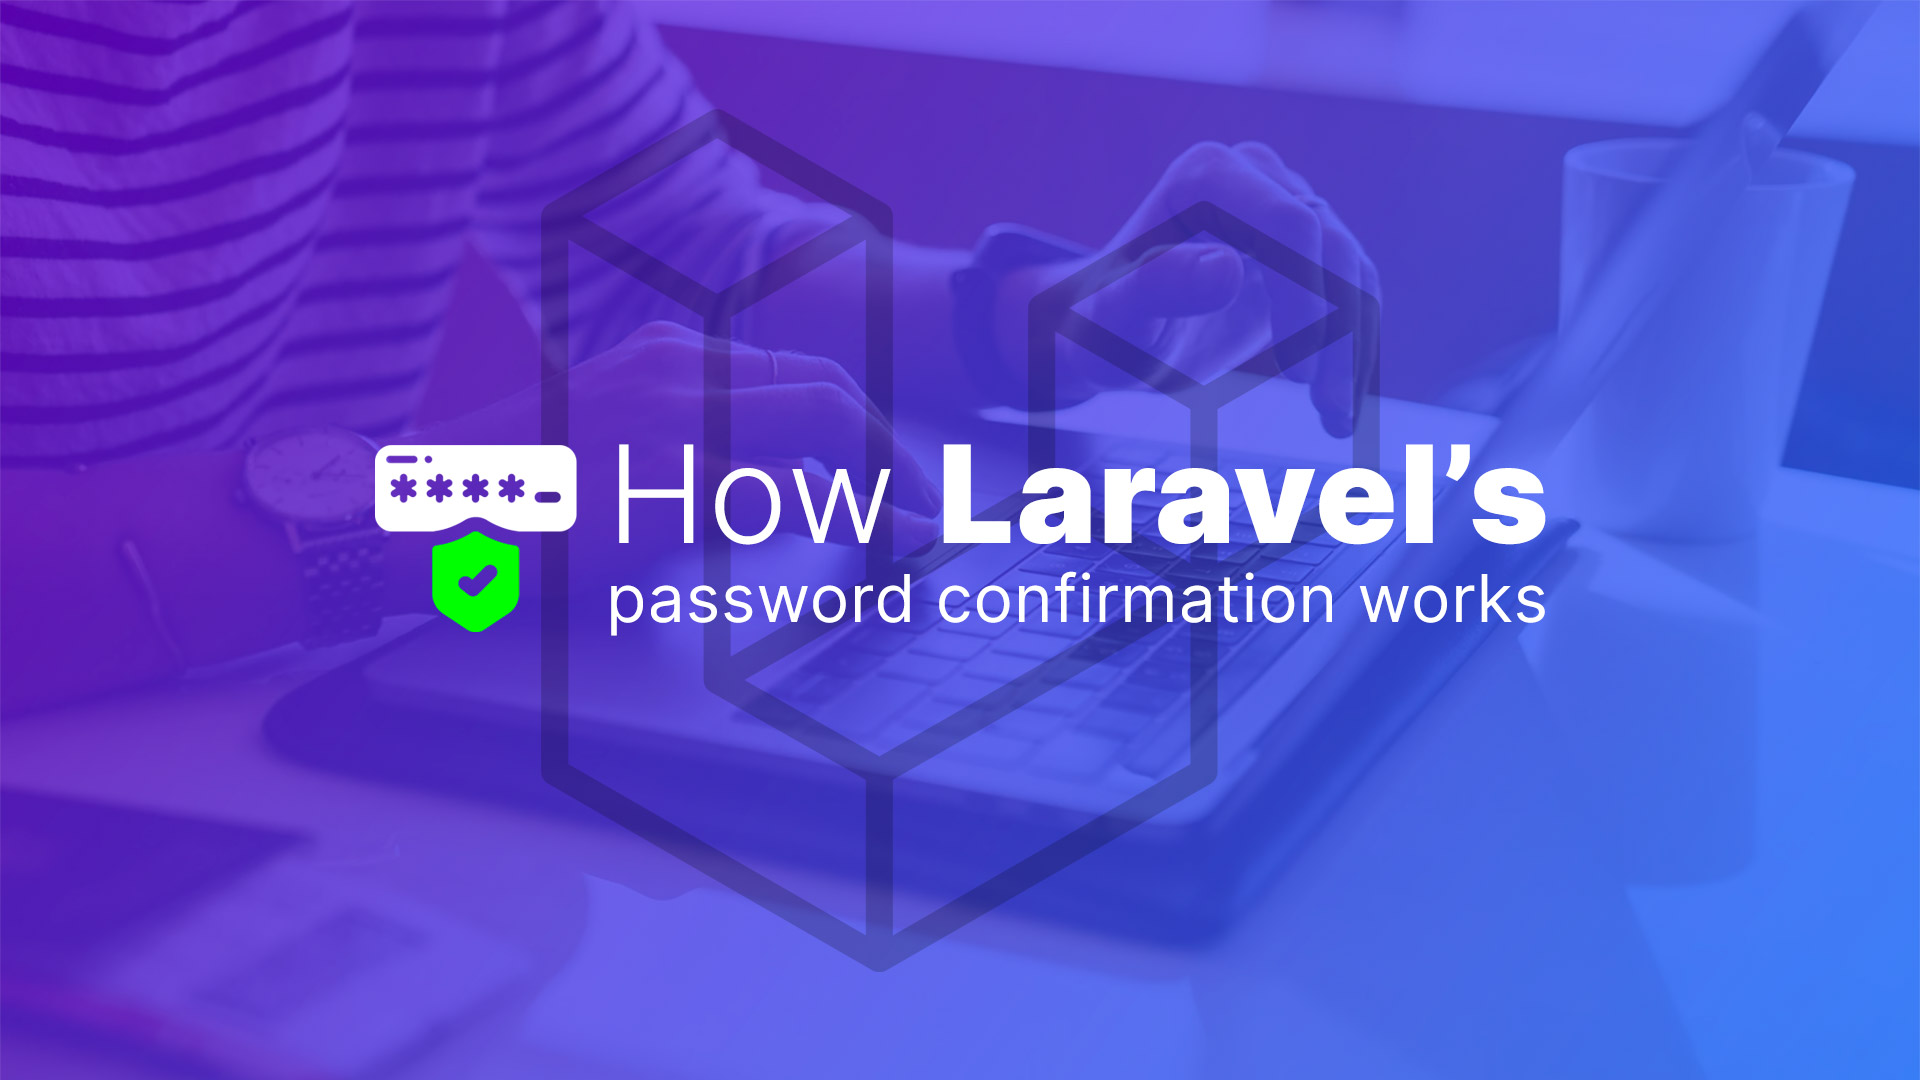 How Laravel's password confirmation works.